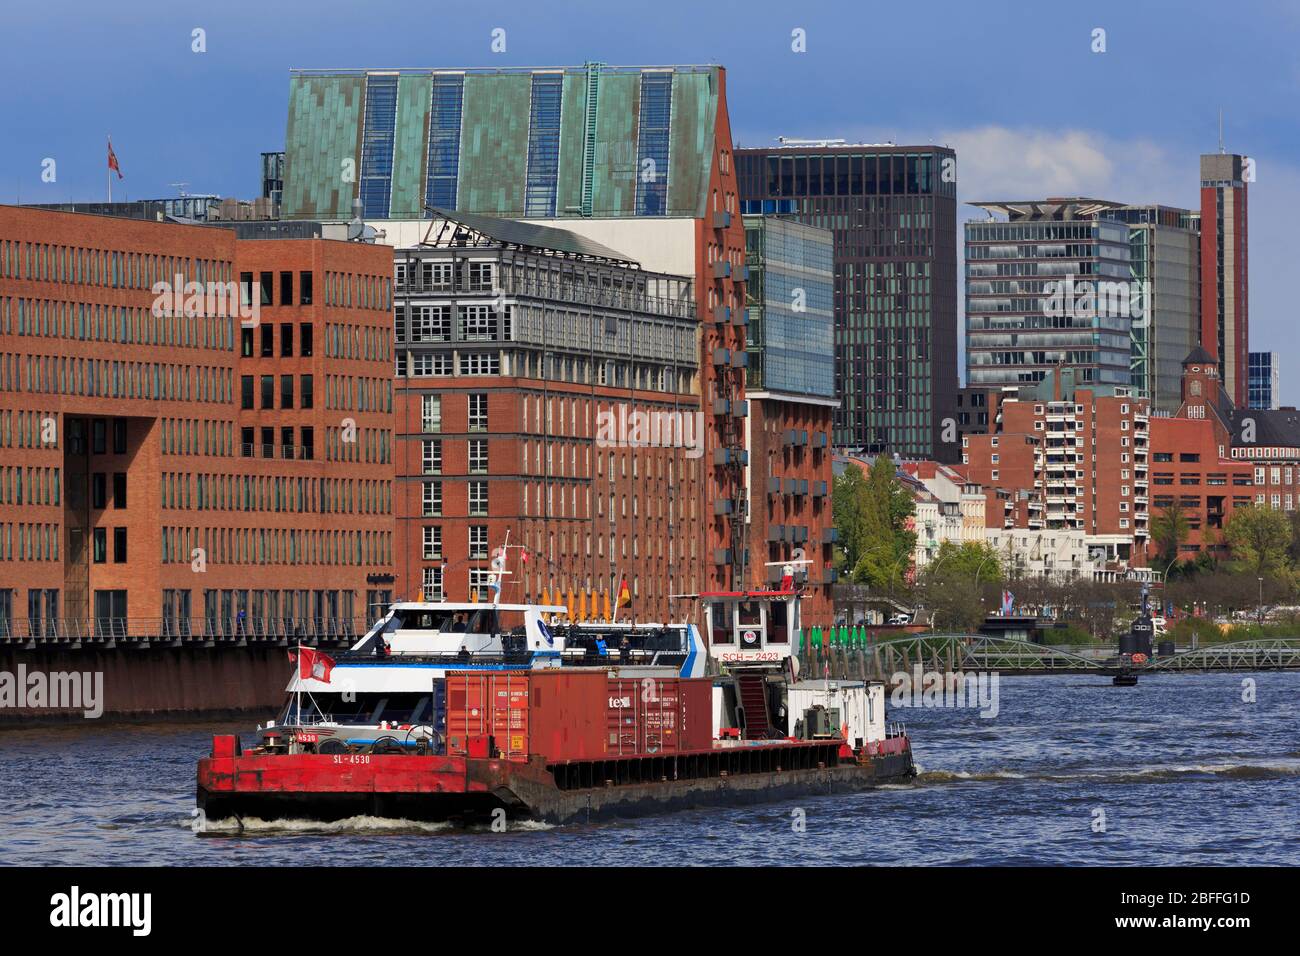 Barge, Elbe River, Altona District, Hamburg, Germany, Europe Stock Photo